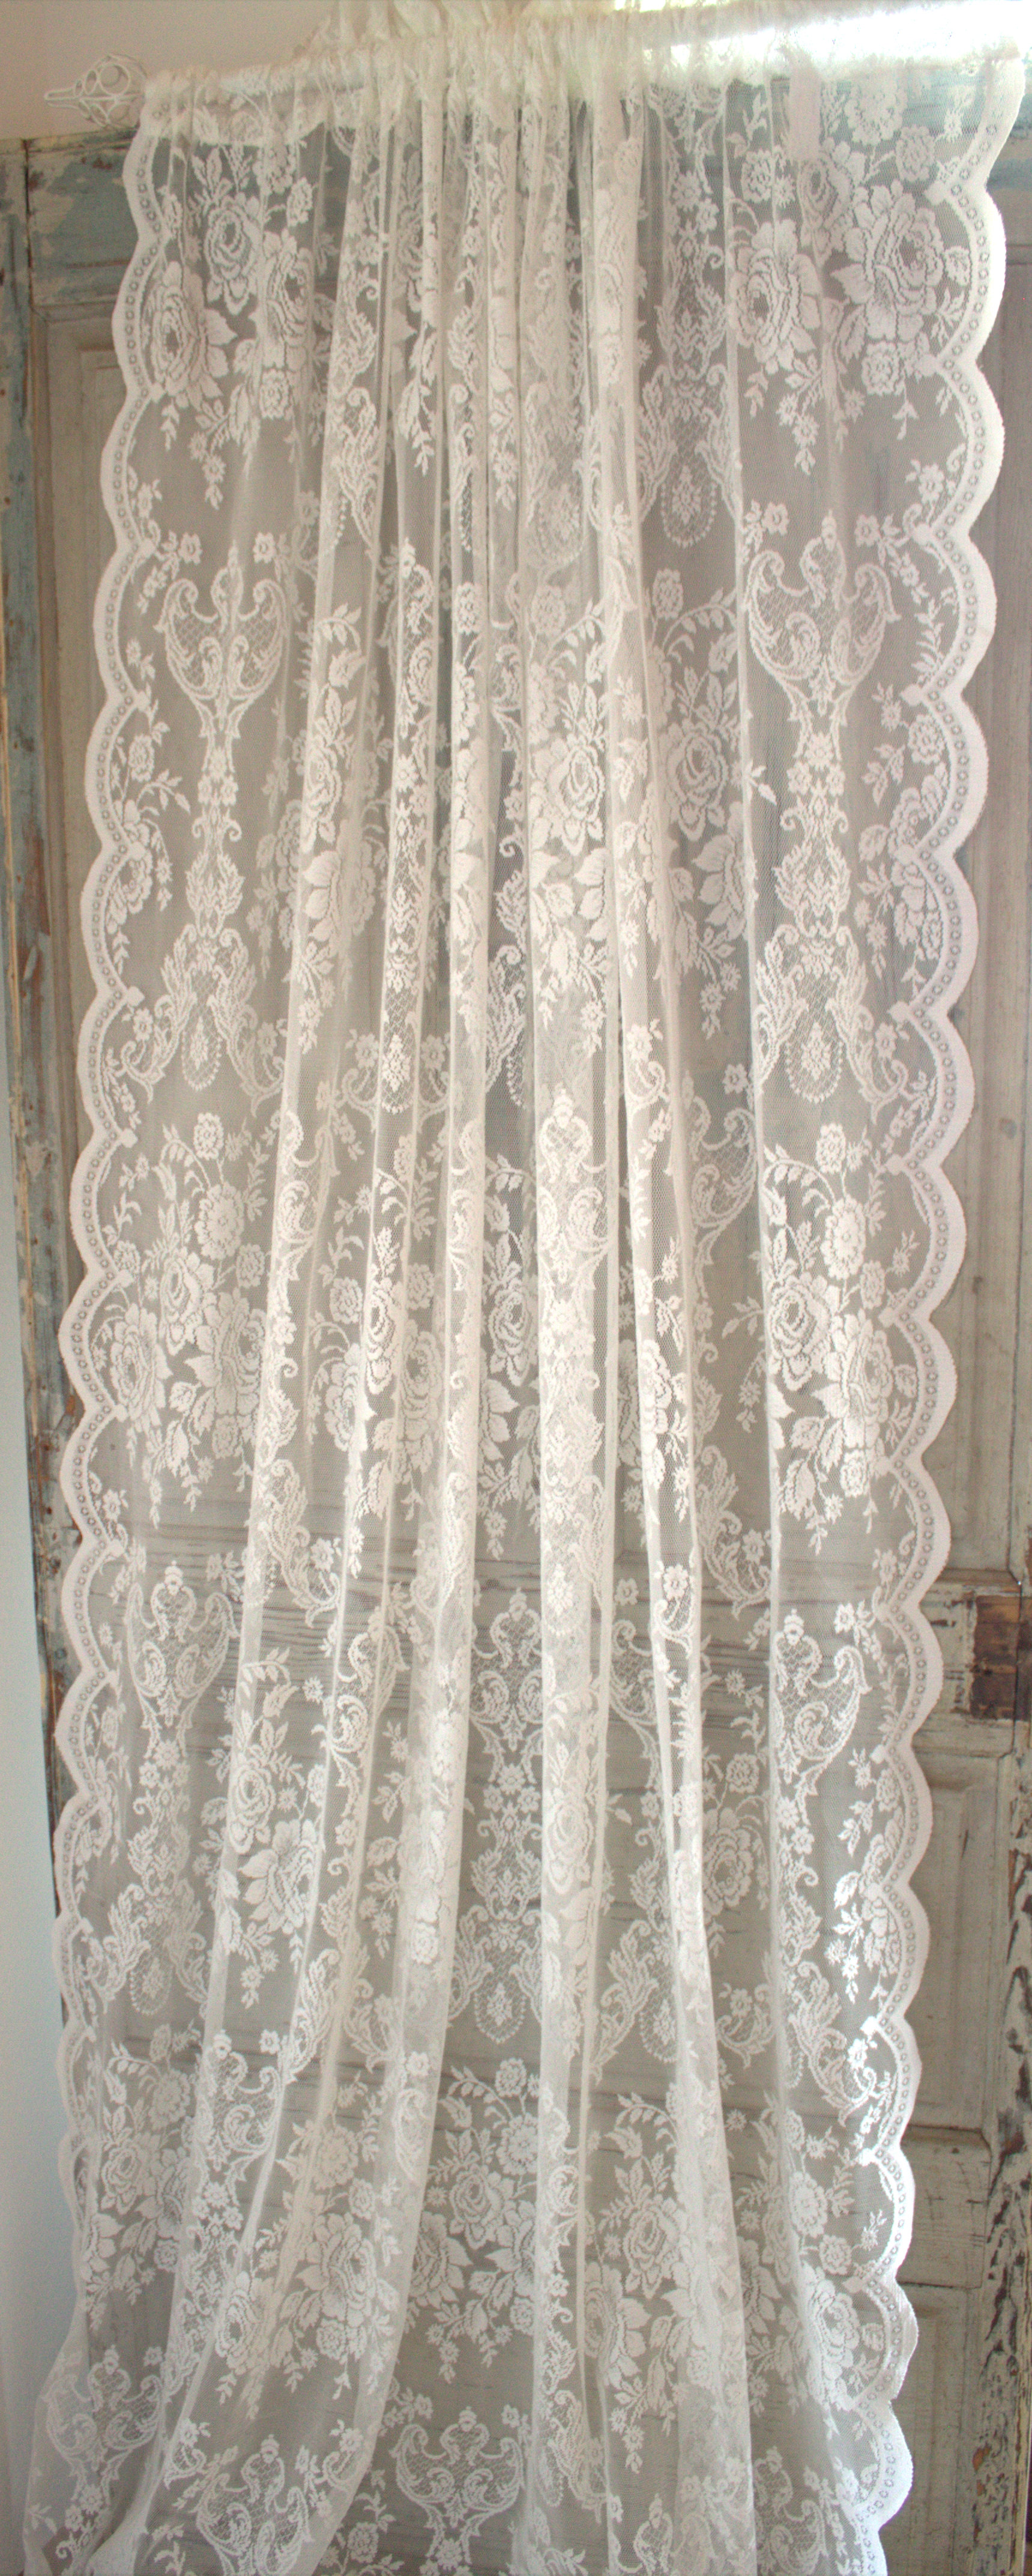 Vorhang LIA Weiß Gardinen Schal 130x240 cm Crincle Look Loft Shabby Vintage